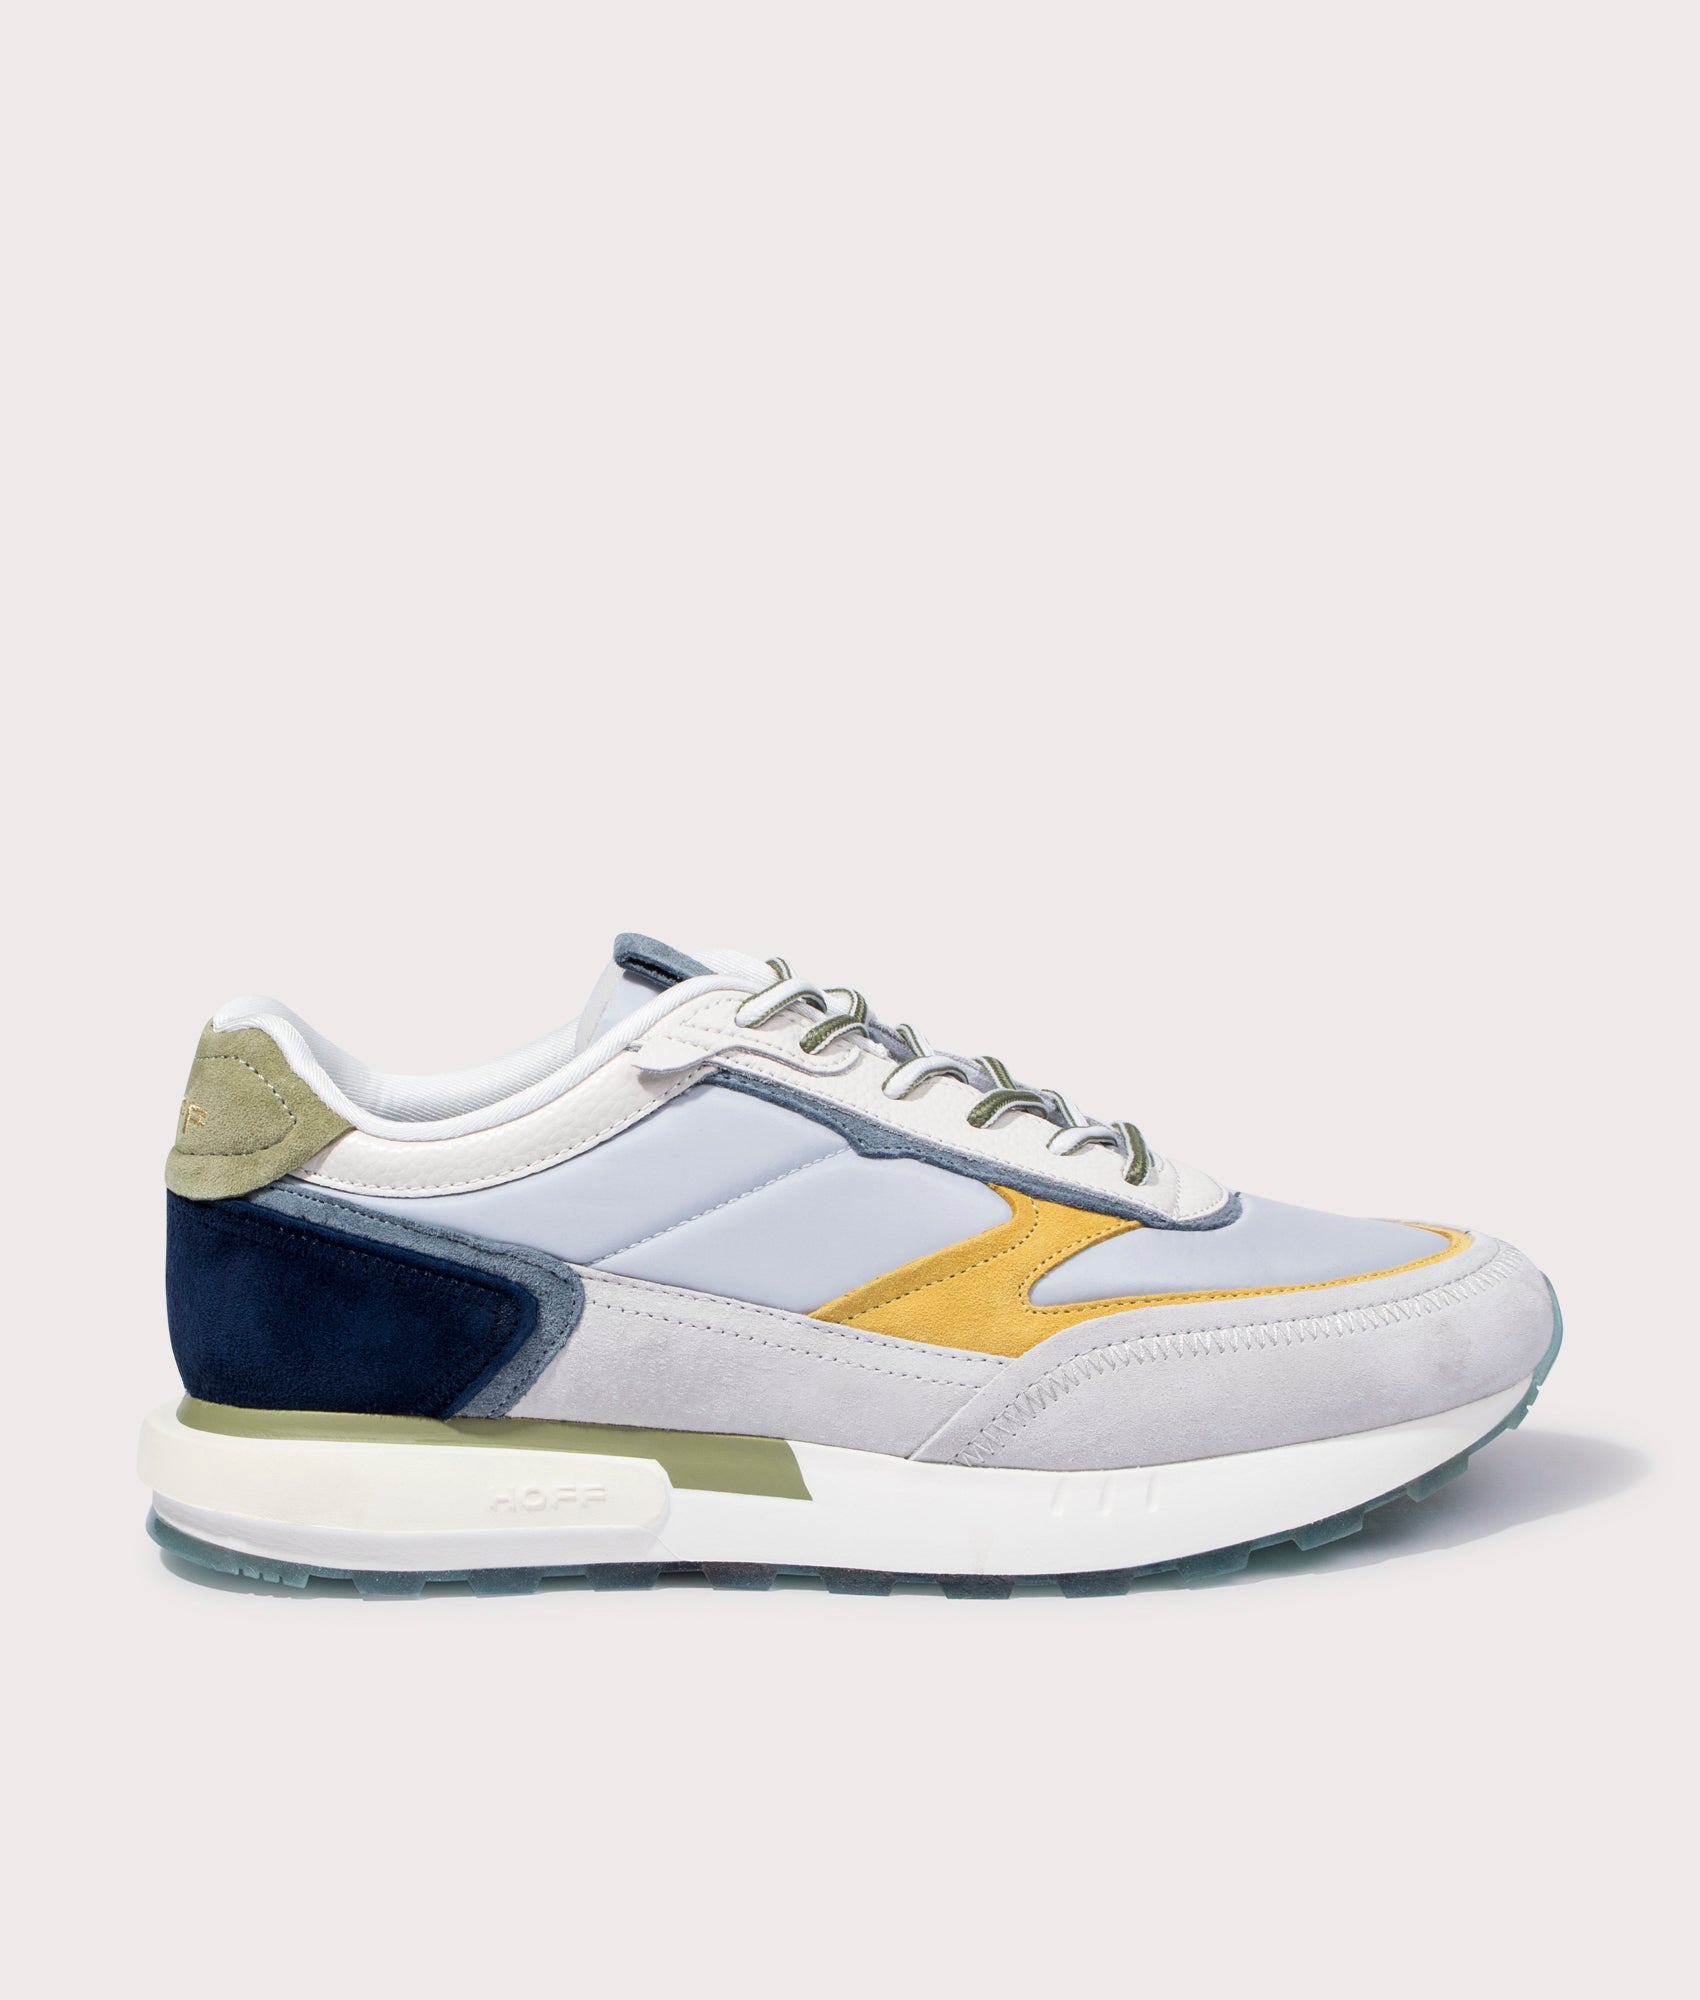 Hoff Mens Yukon Sneakers - Colour: 50 Light/Pastel Grey - Size: 11